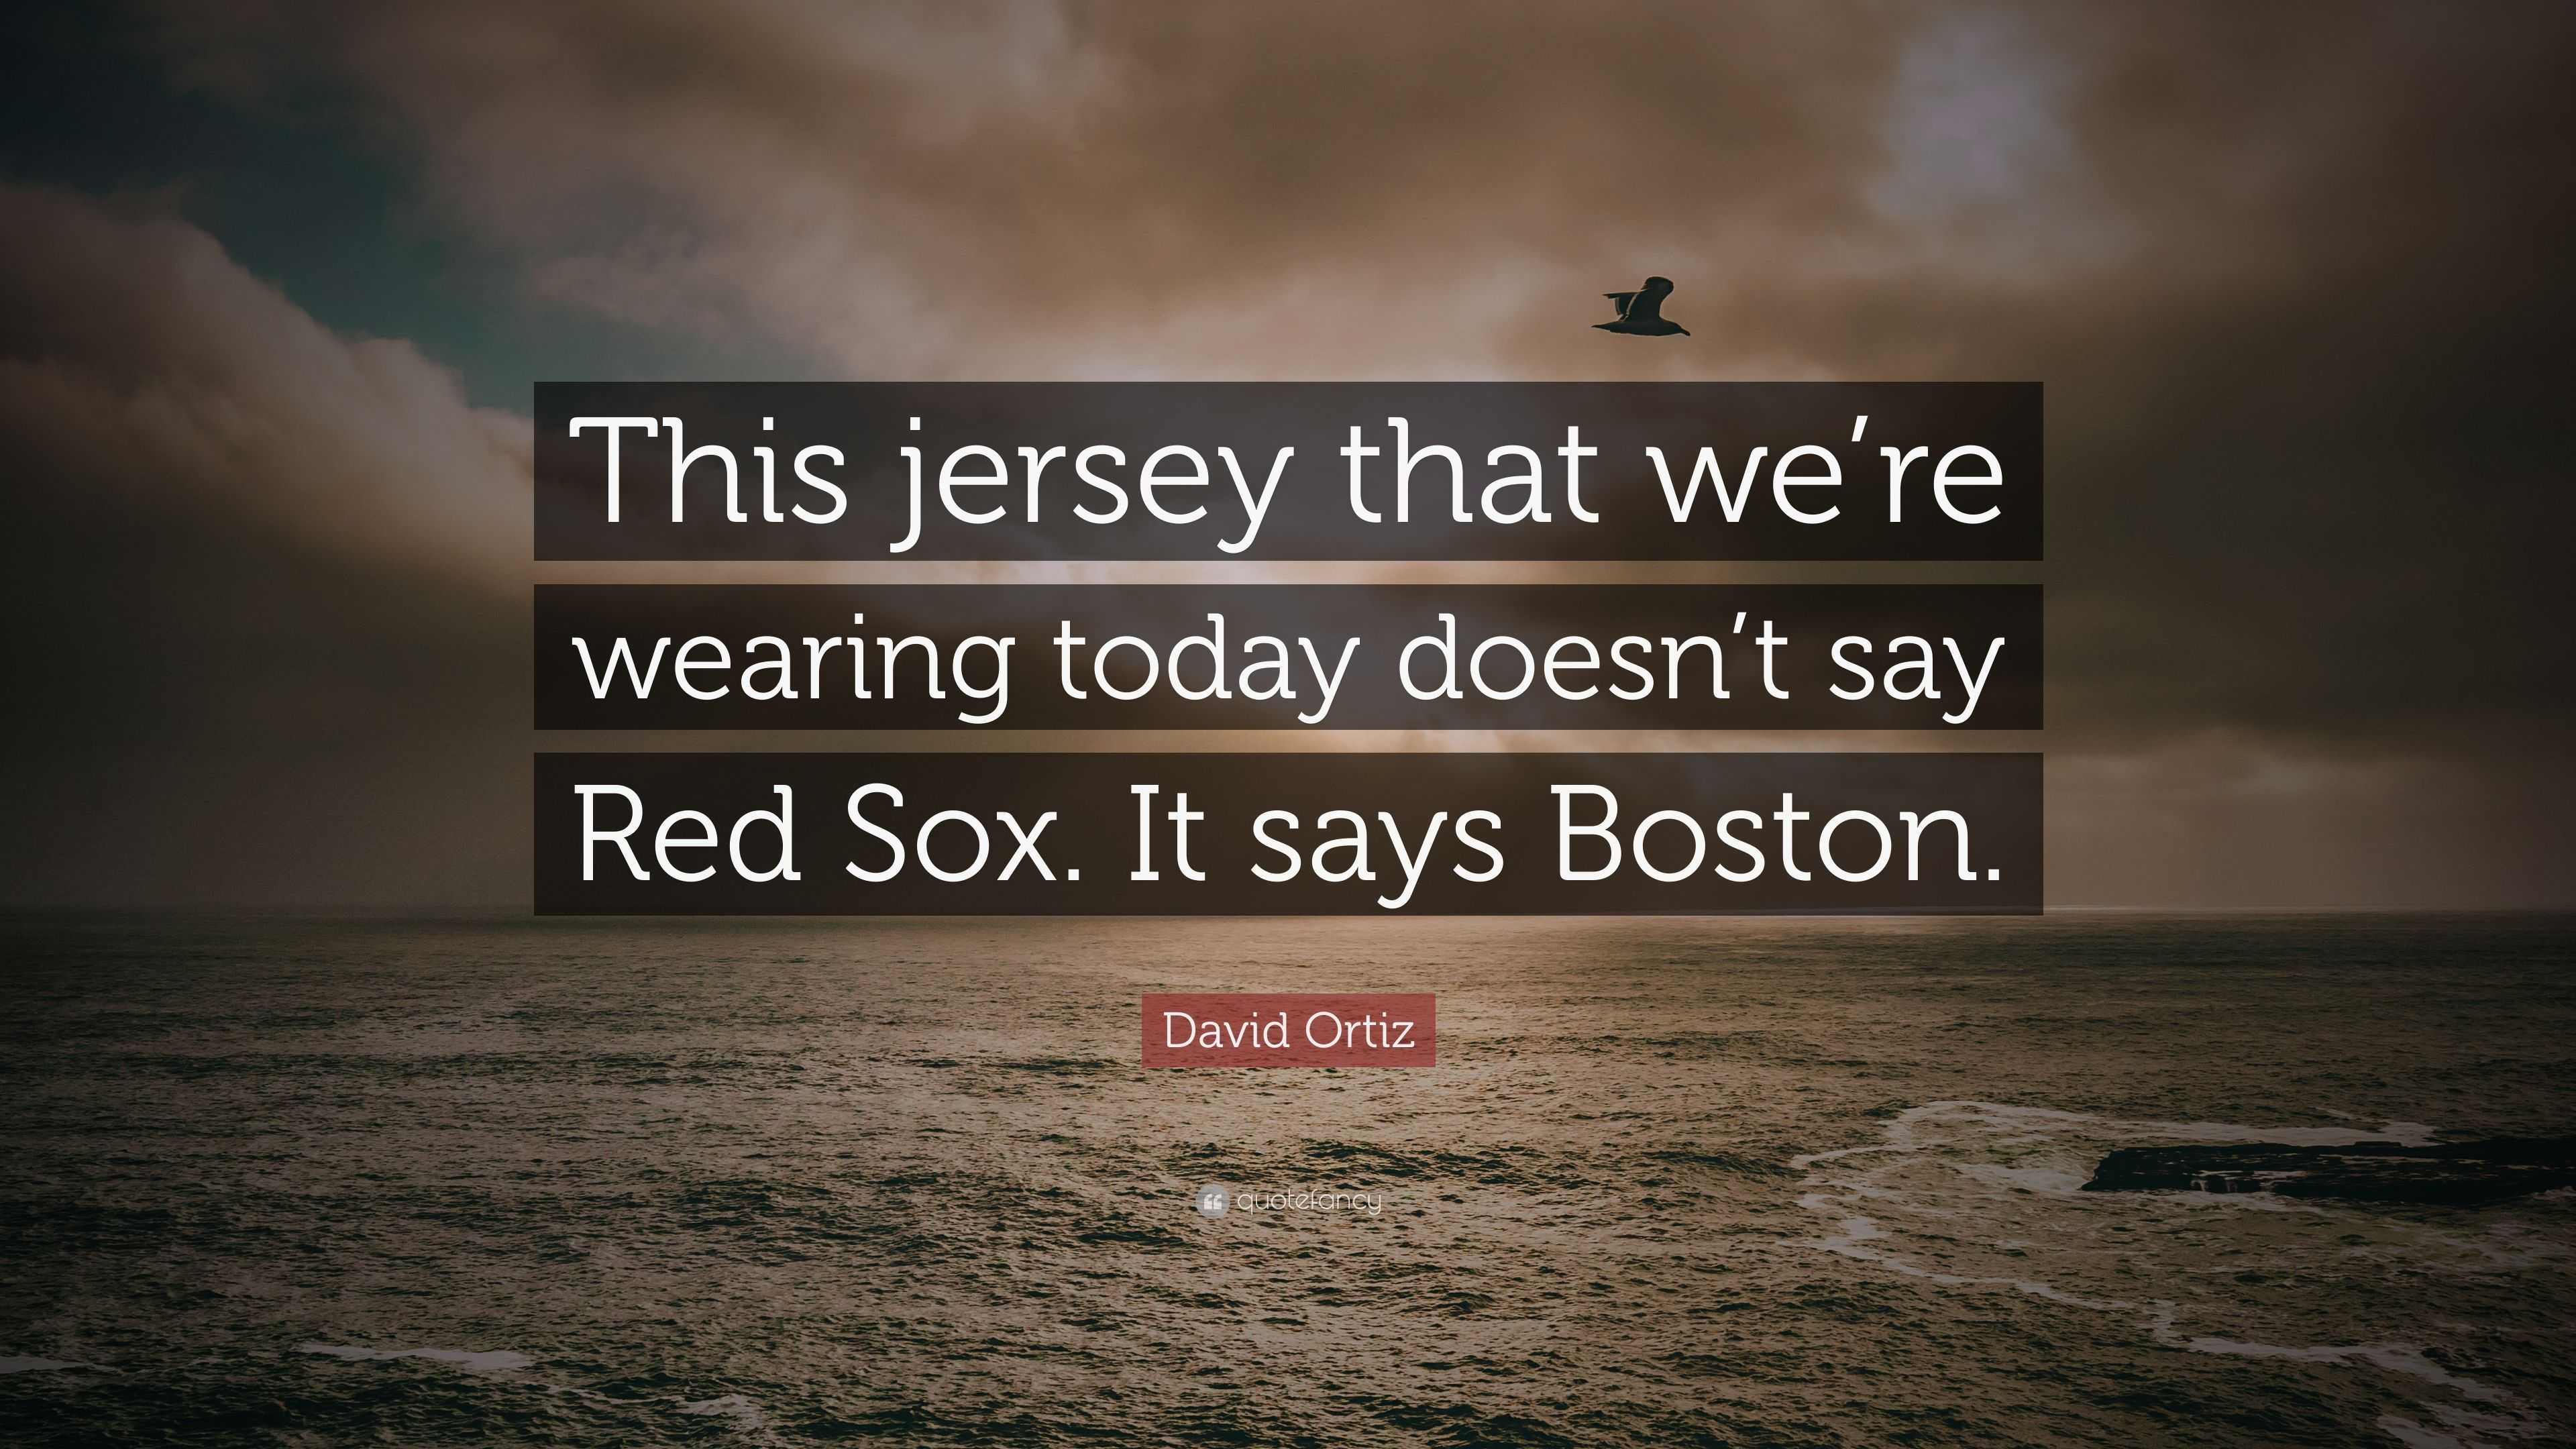 Boston Red Sox wearing David Ortiz (gold crown) T-shirts ahead of